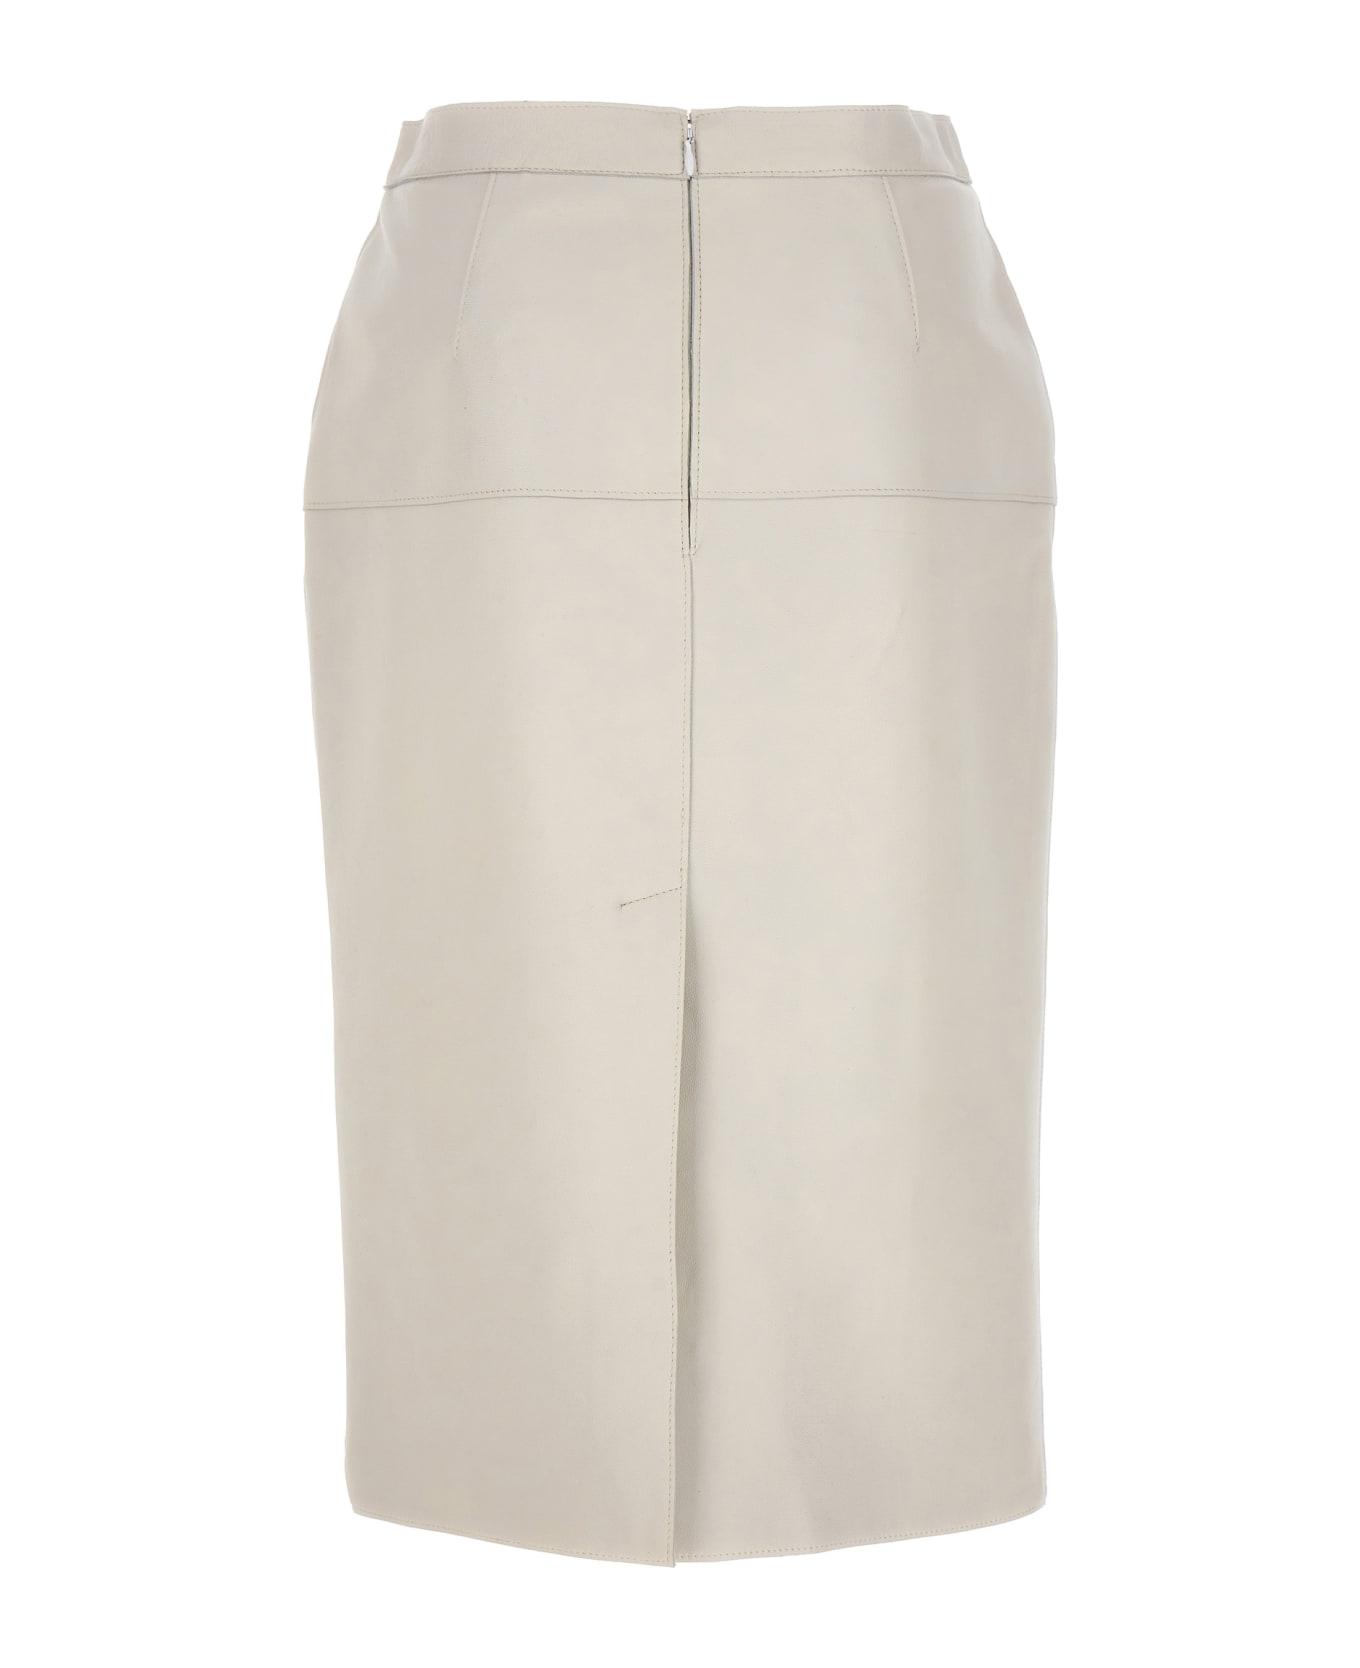 Parosh Leather Skirt - White